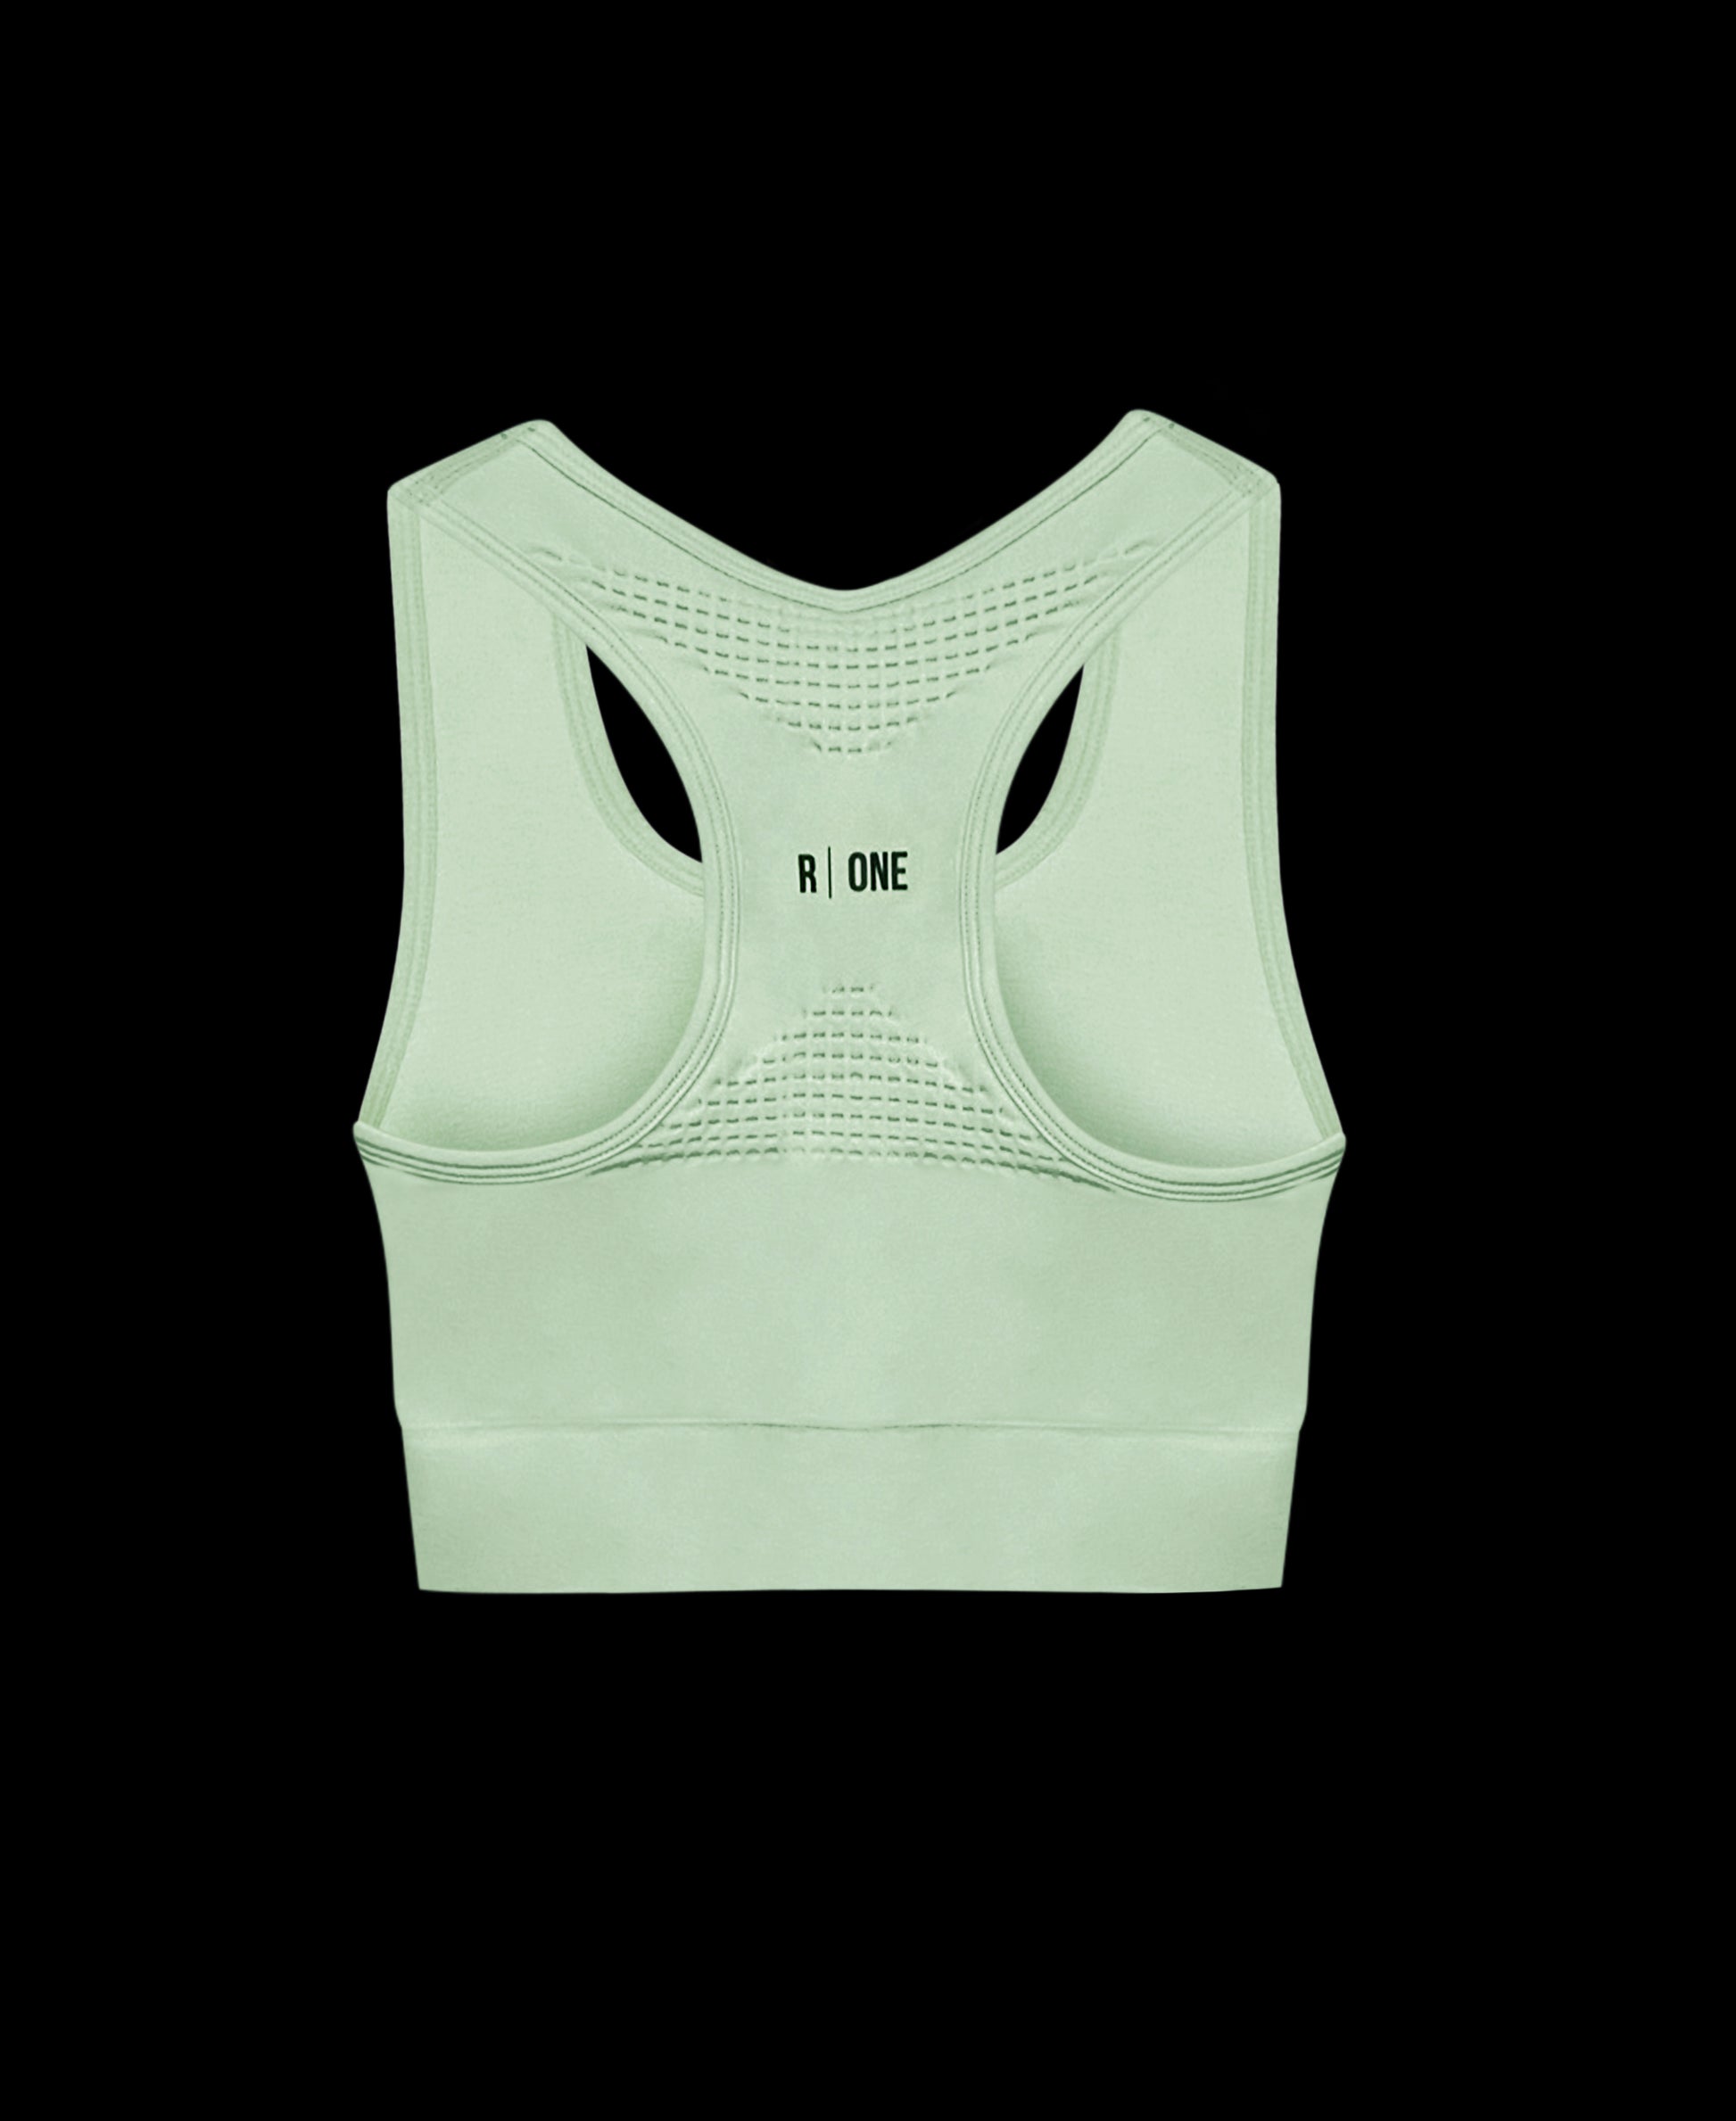 green sports bra